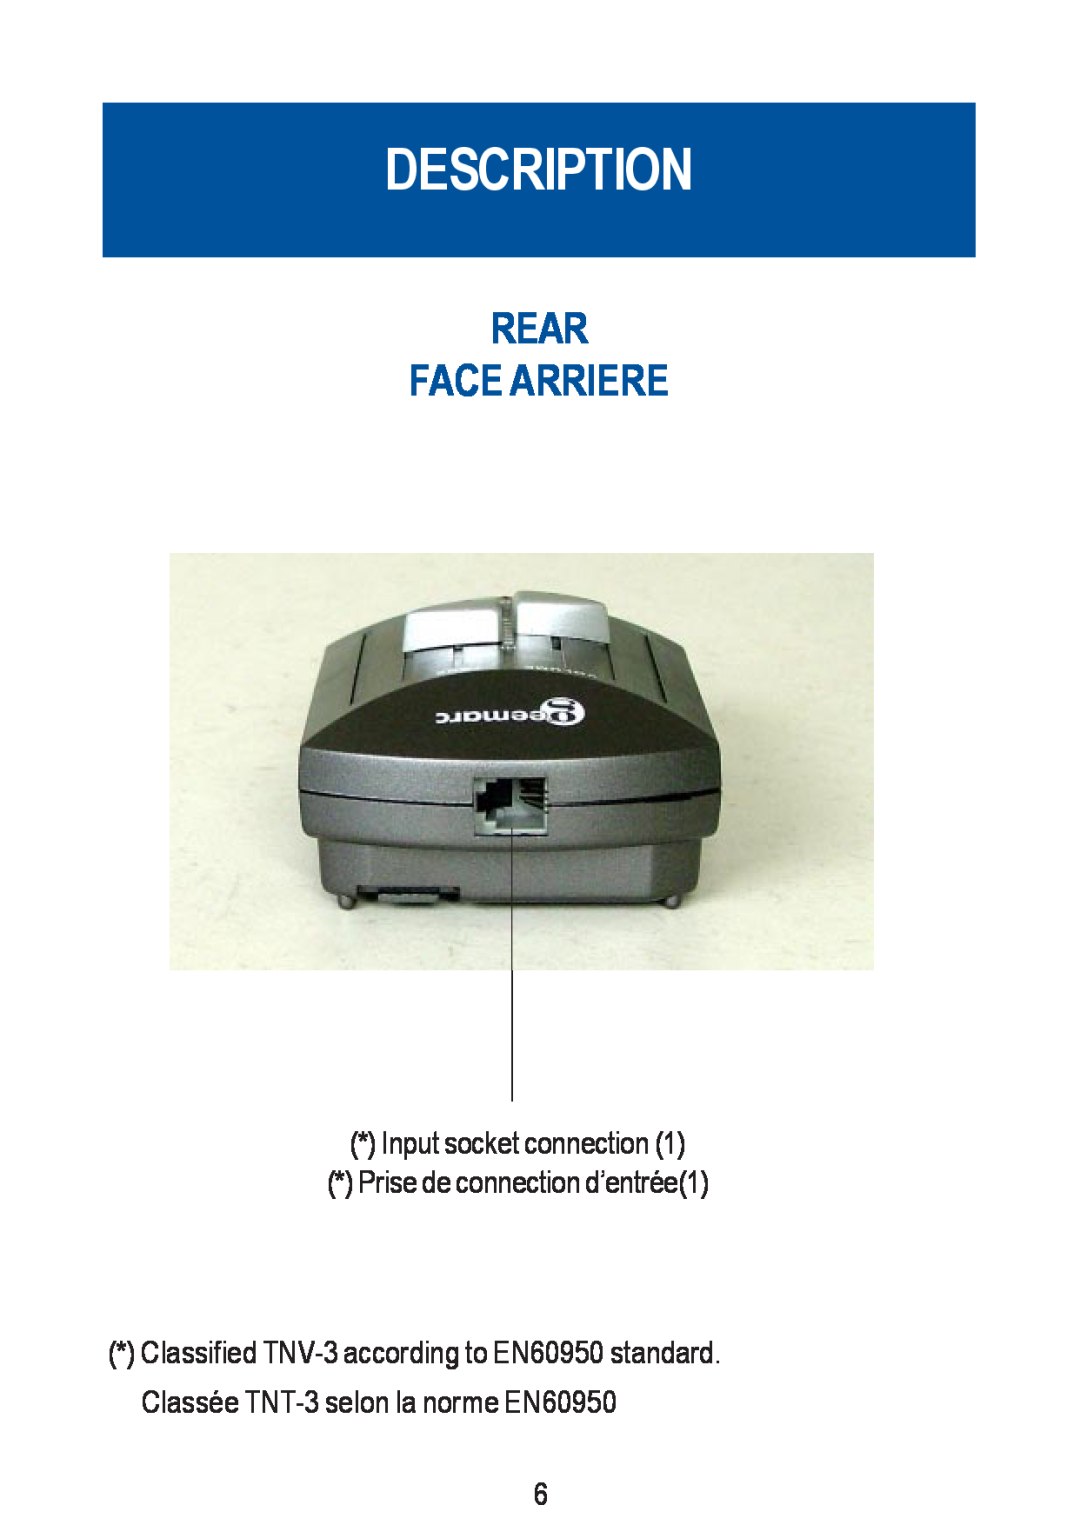 Geemarc CLA-40 VOX manual Description, Rear Face Arriere 